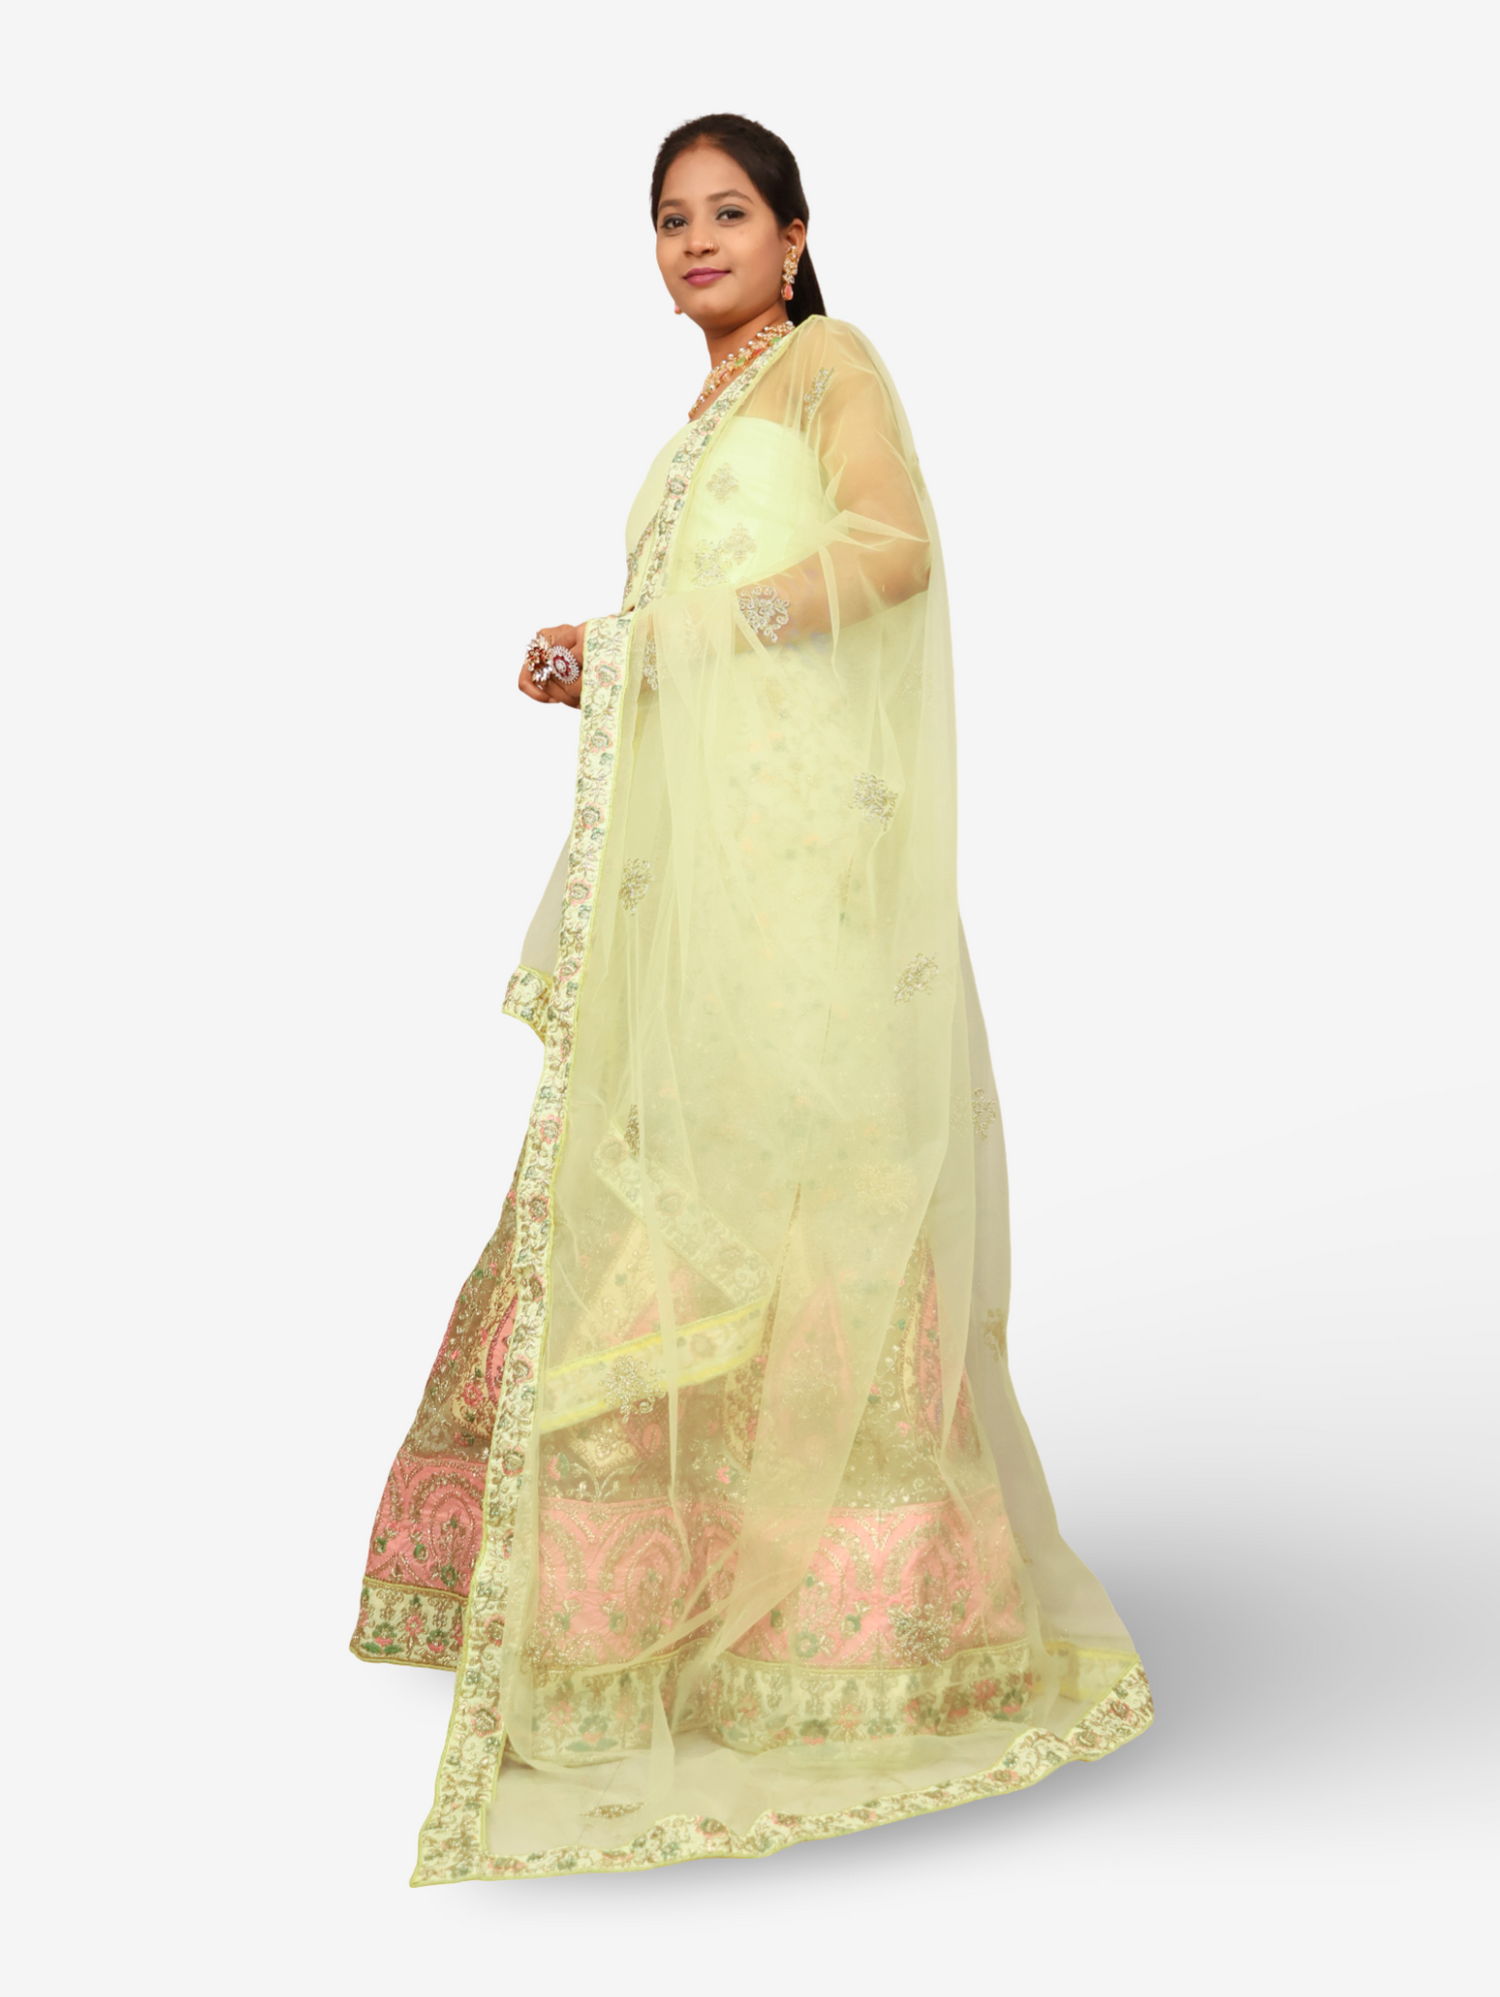 Semi-Stitched Lehenga with Soft Net Fabric &amp; Zari Thread Work by Shreekama Lemon Yellow Semi-Stitched Lehenga for Party Festival Wedding Occasion in Noida